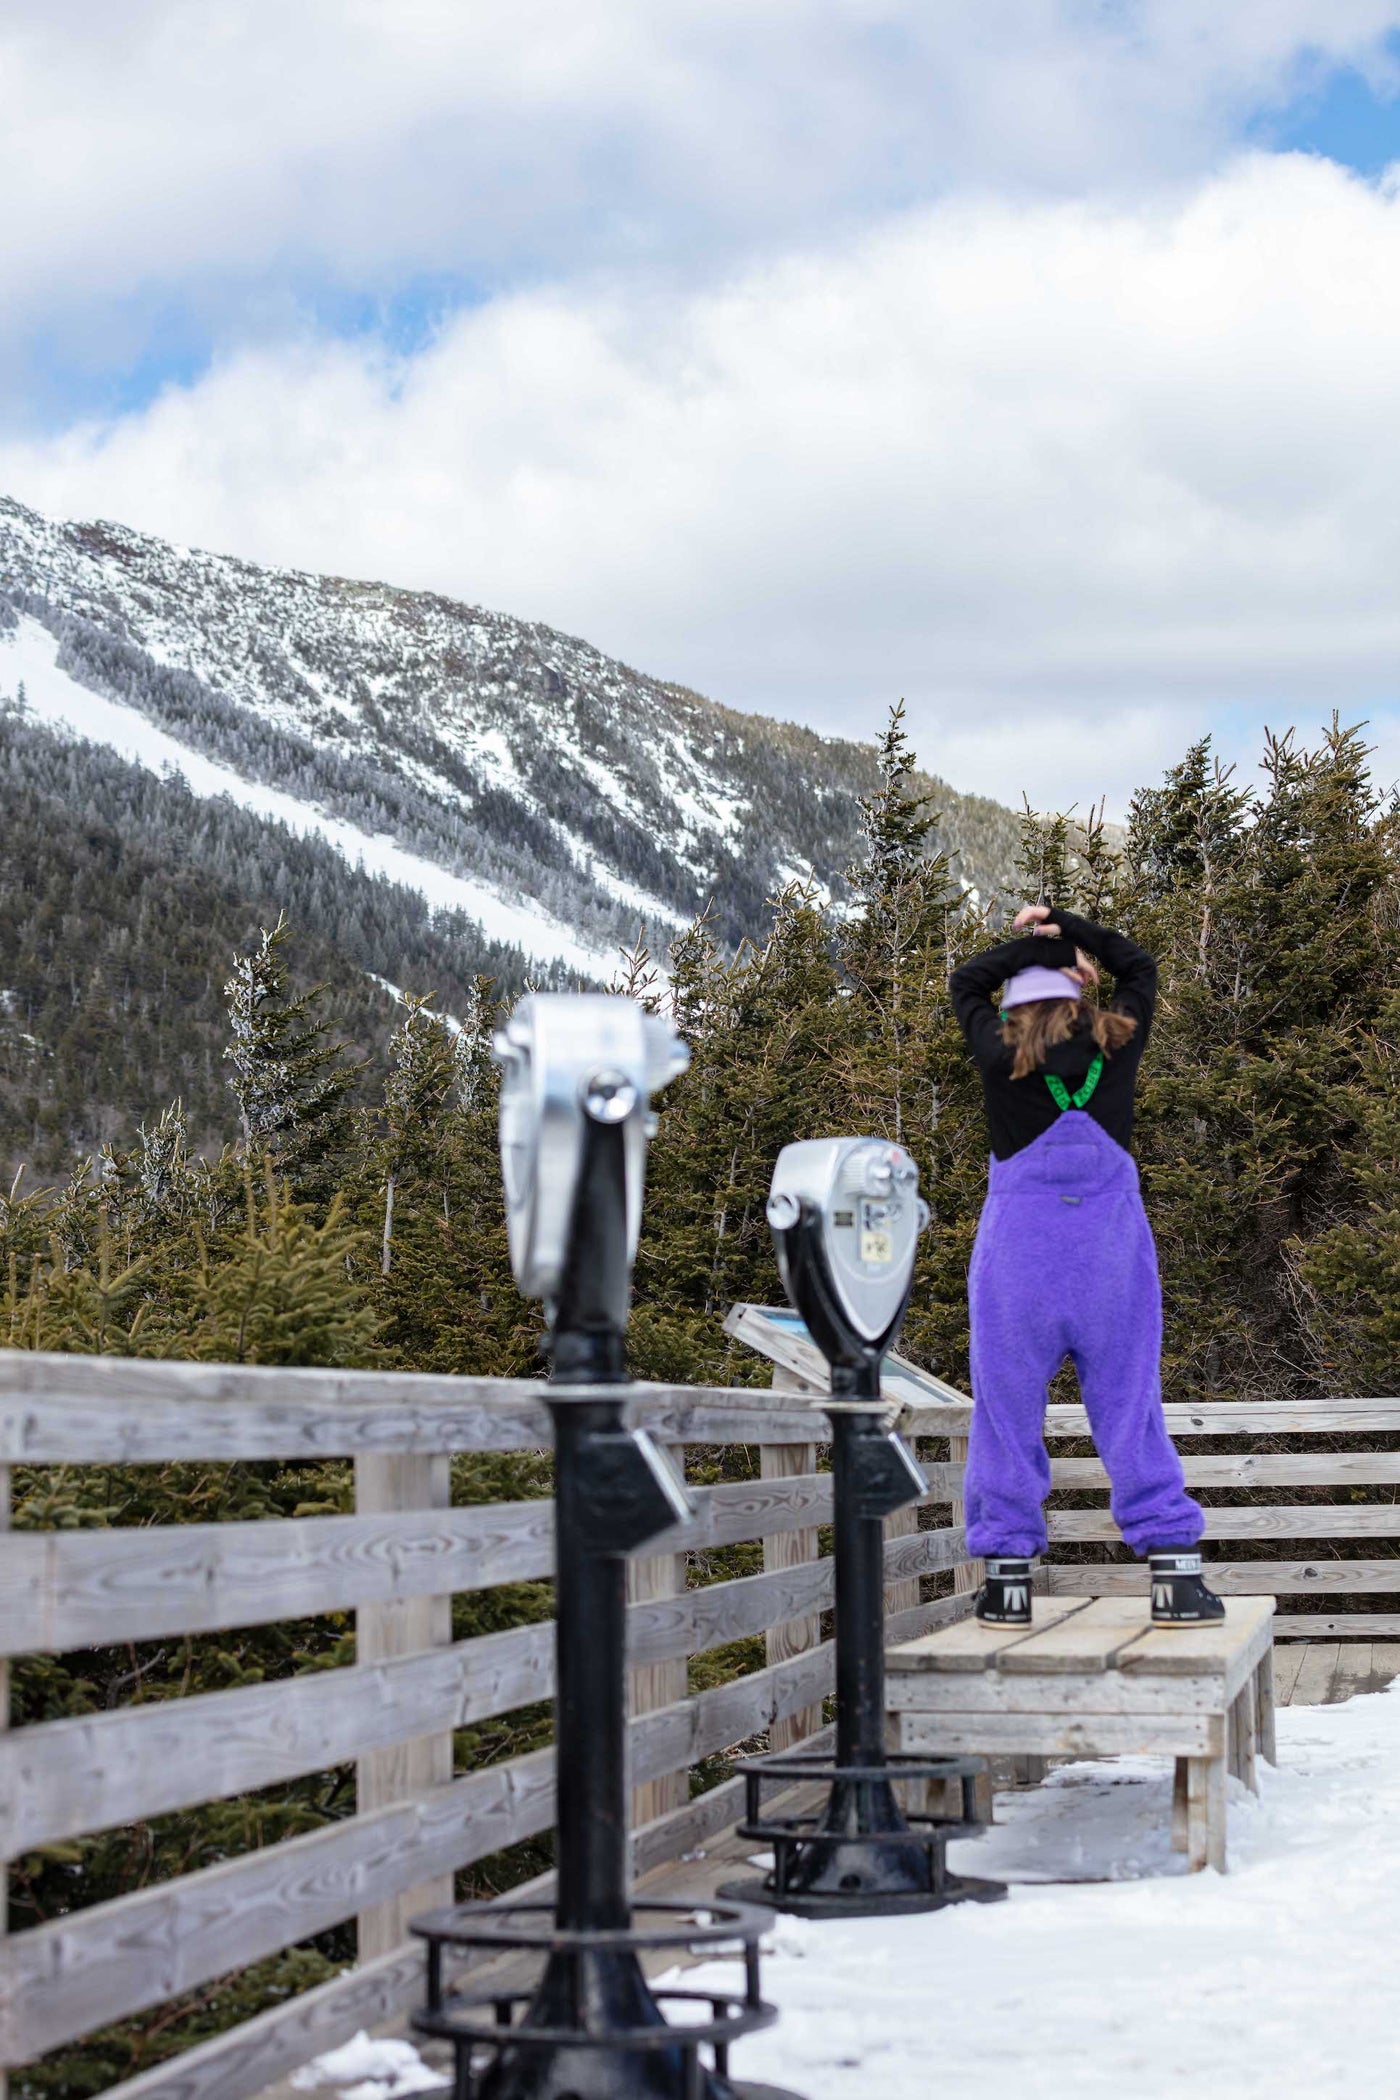 BIRDZ Sherpa Overall |Purple| Women